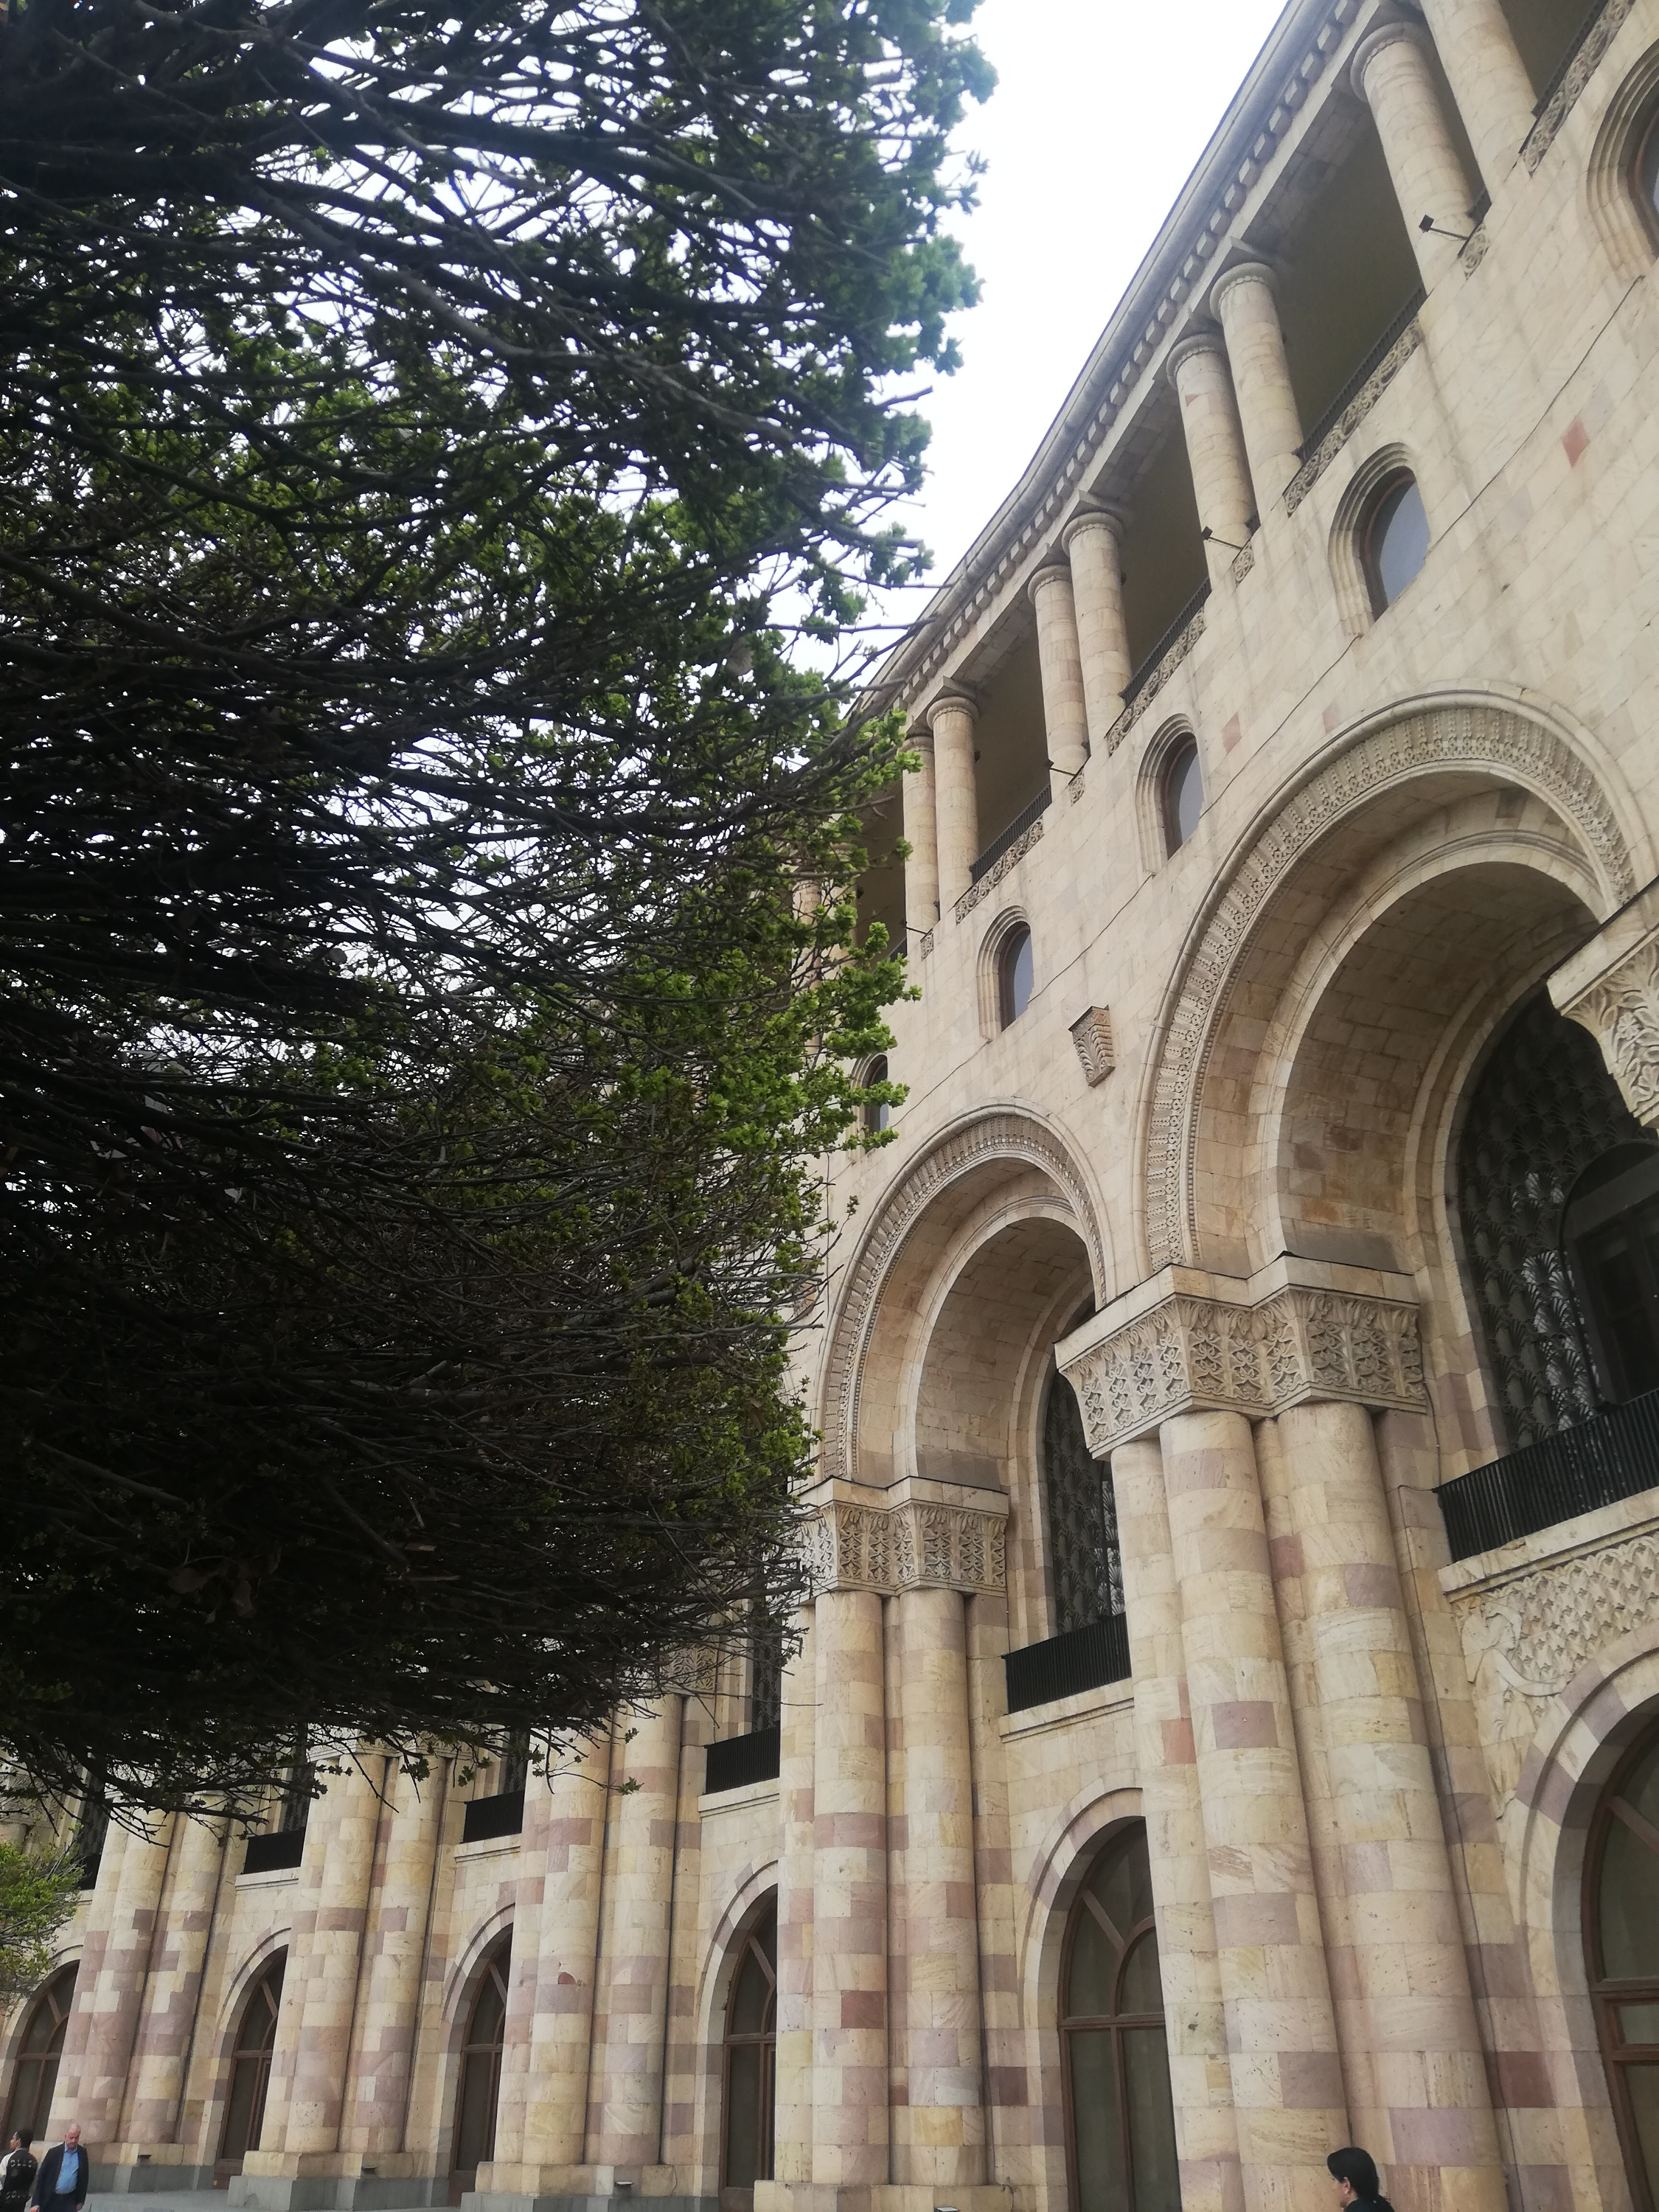 Переехавшим сибирякам нравится старая архитектура Еревана